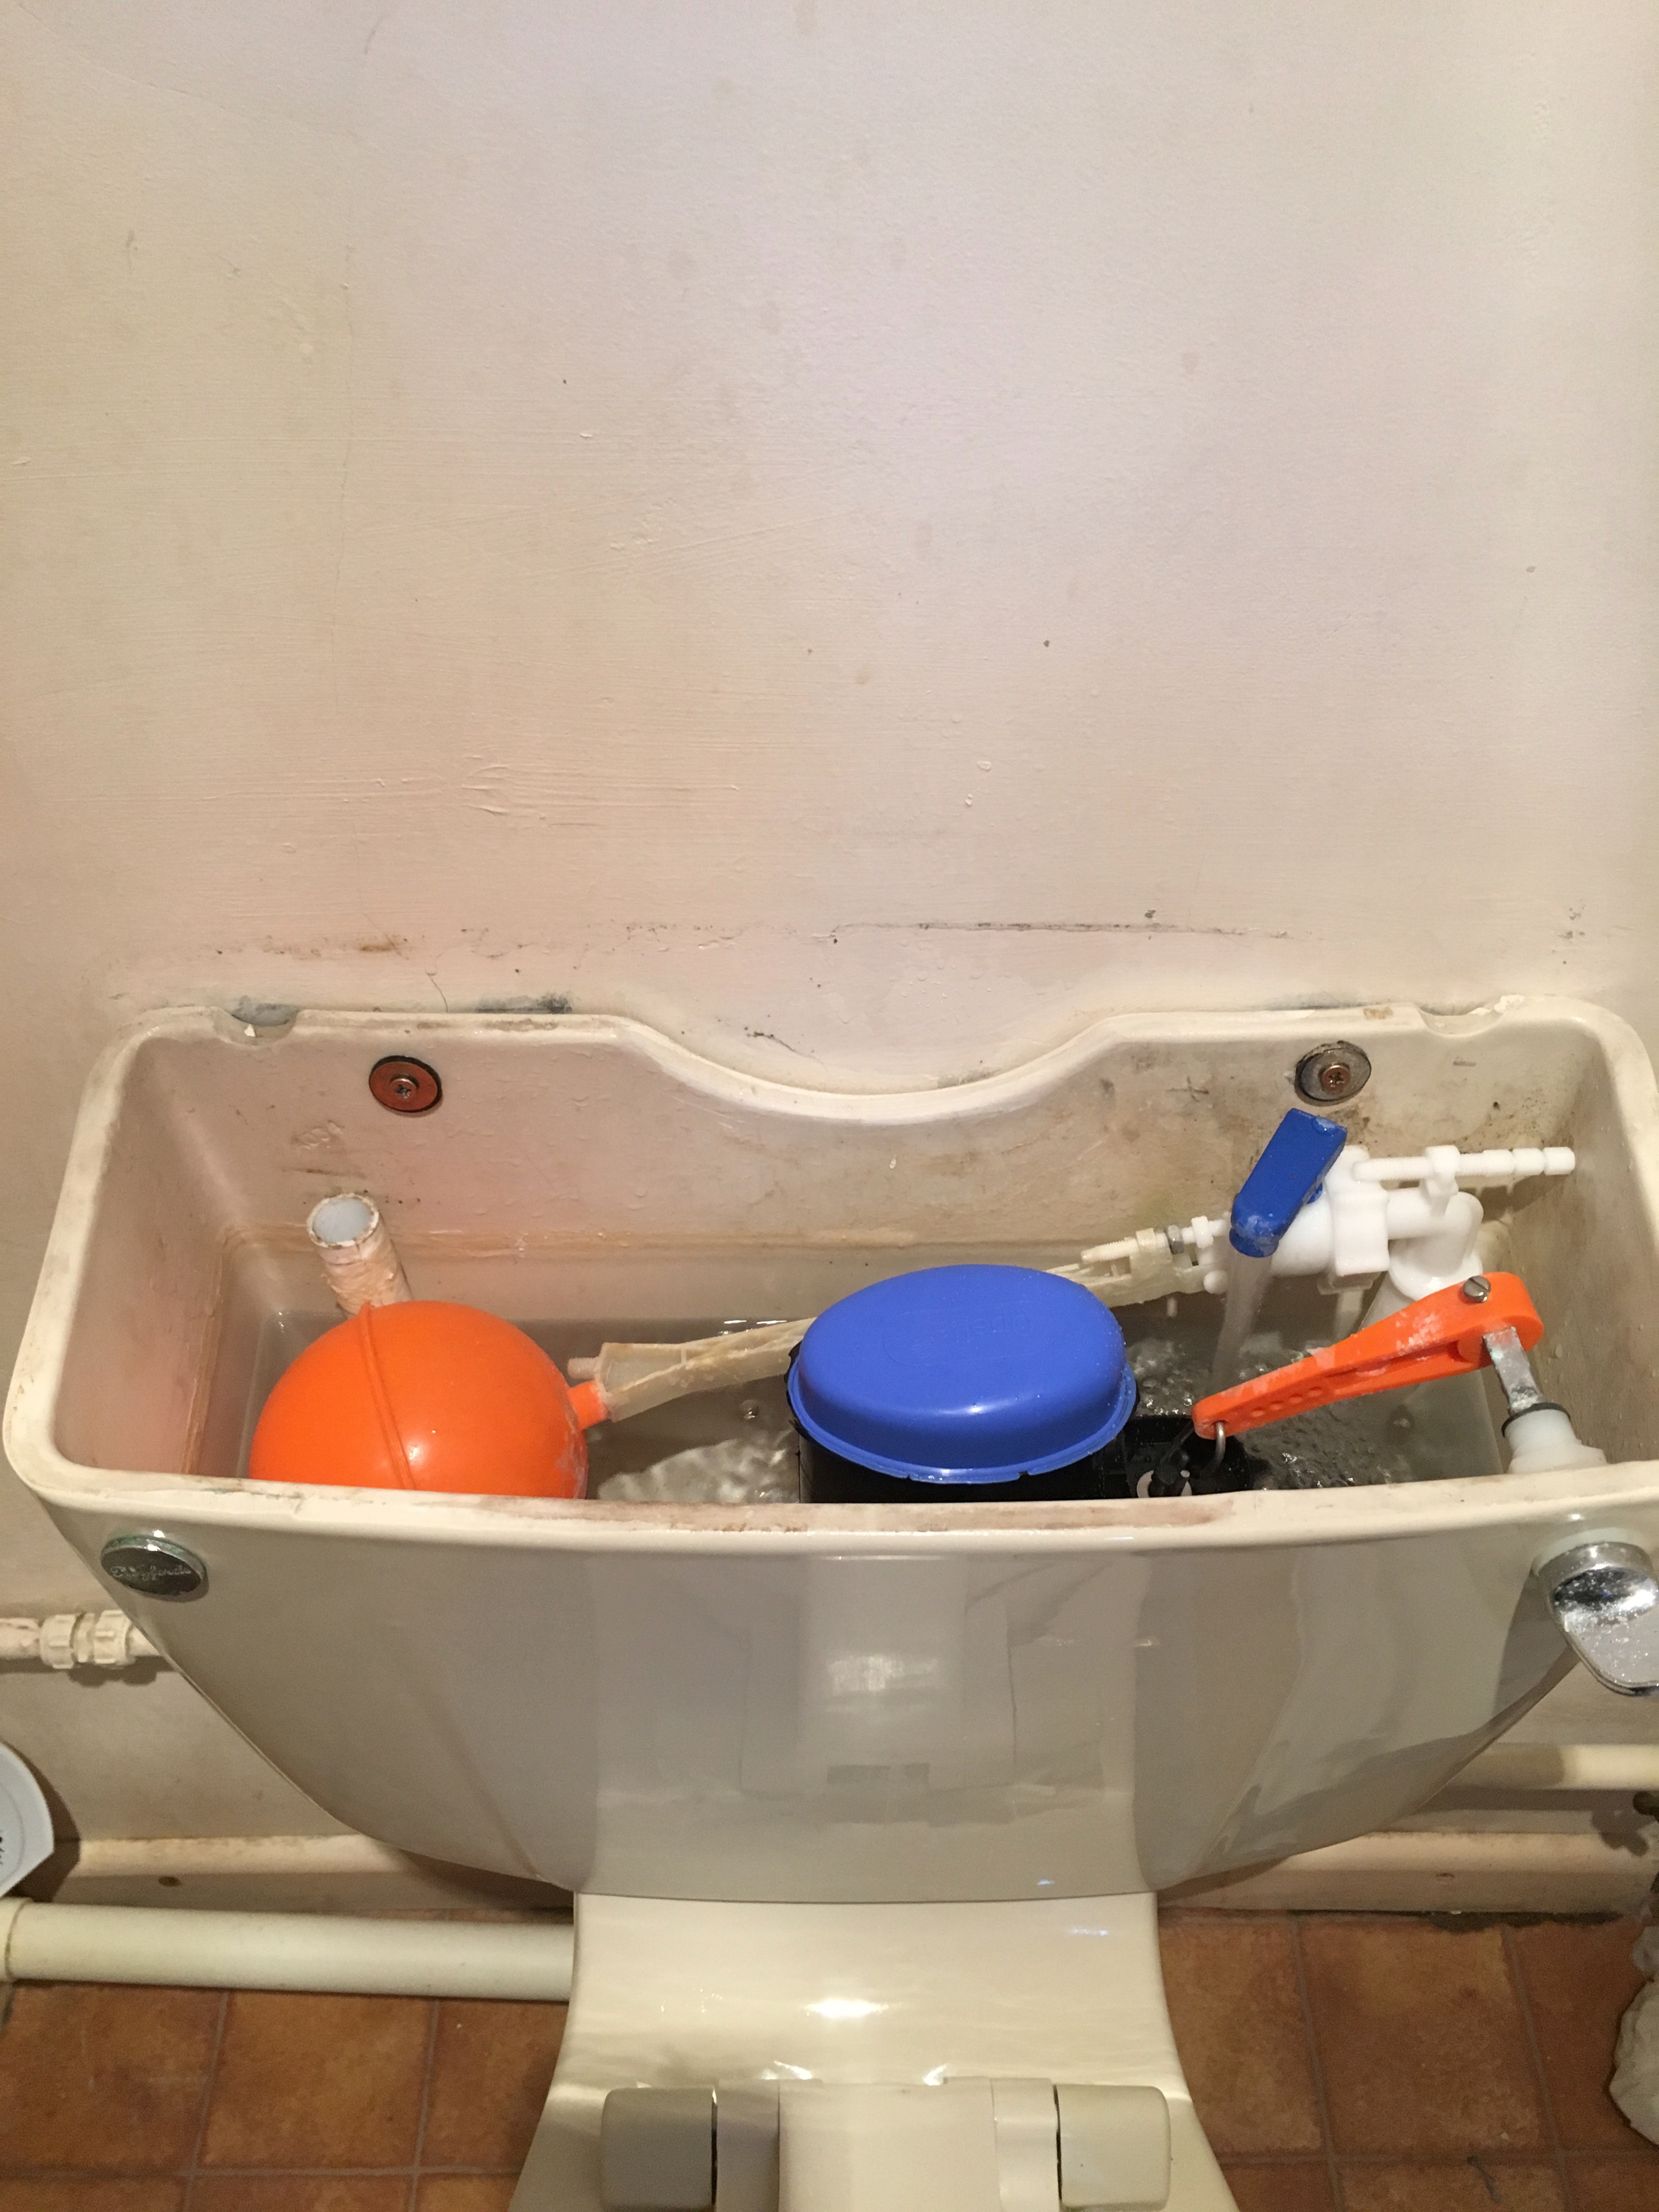 Flush valve replacement